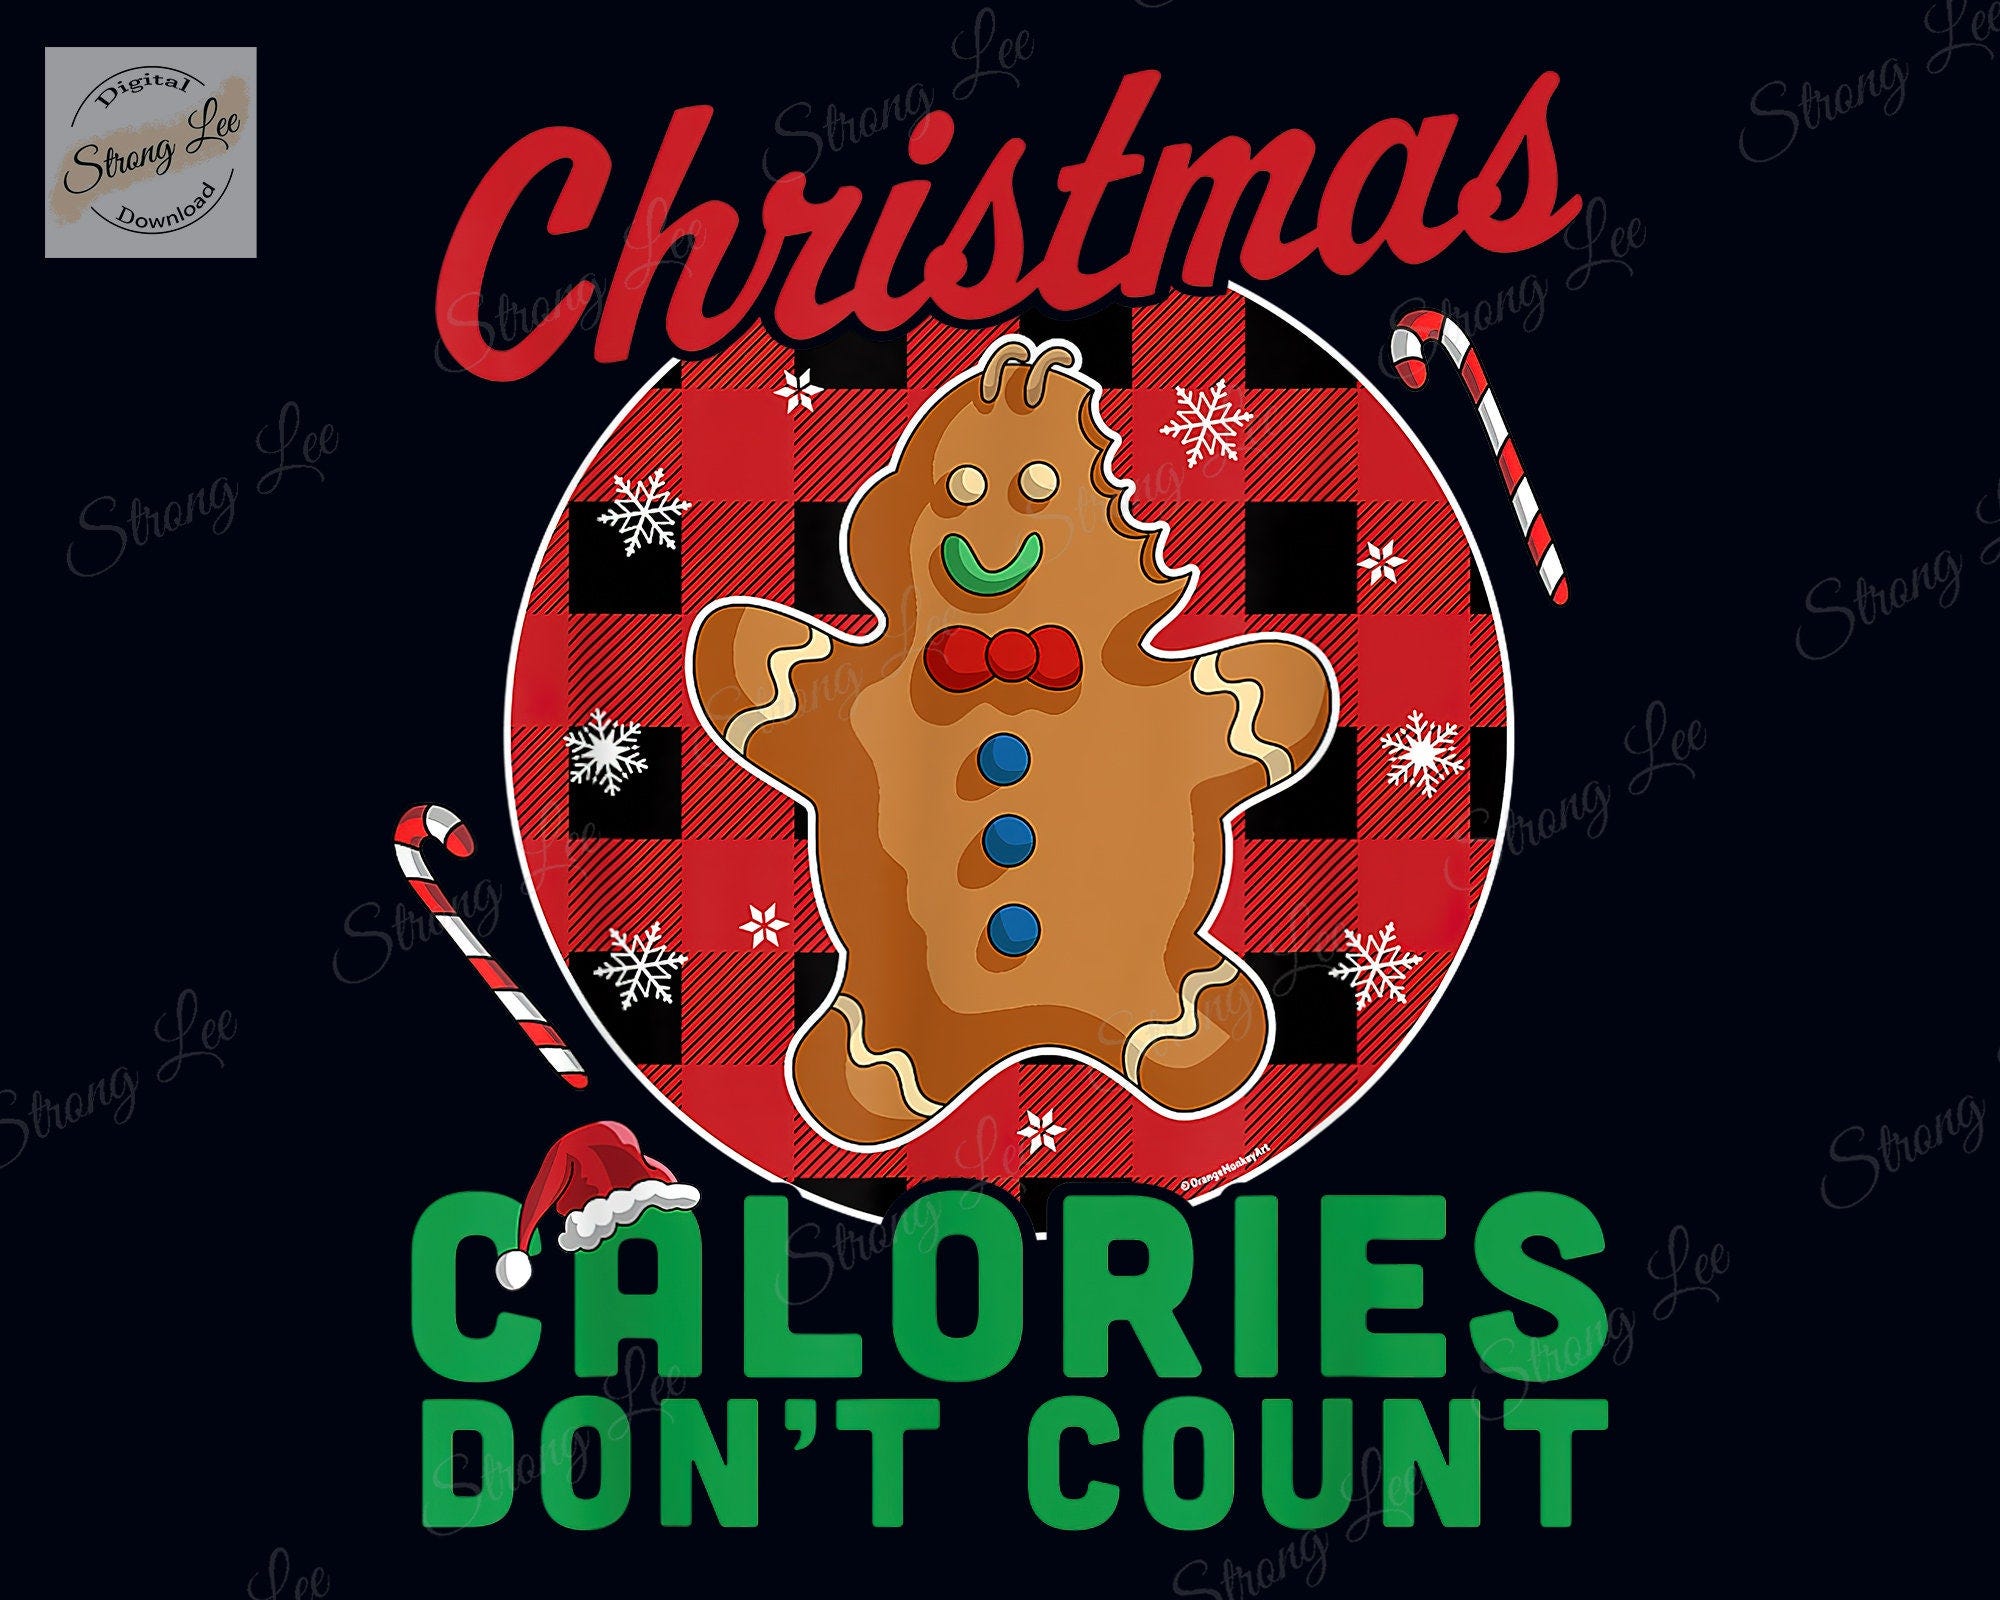 Christmas Calories Don